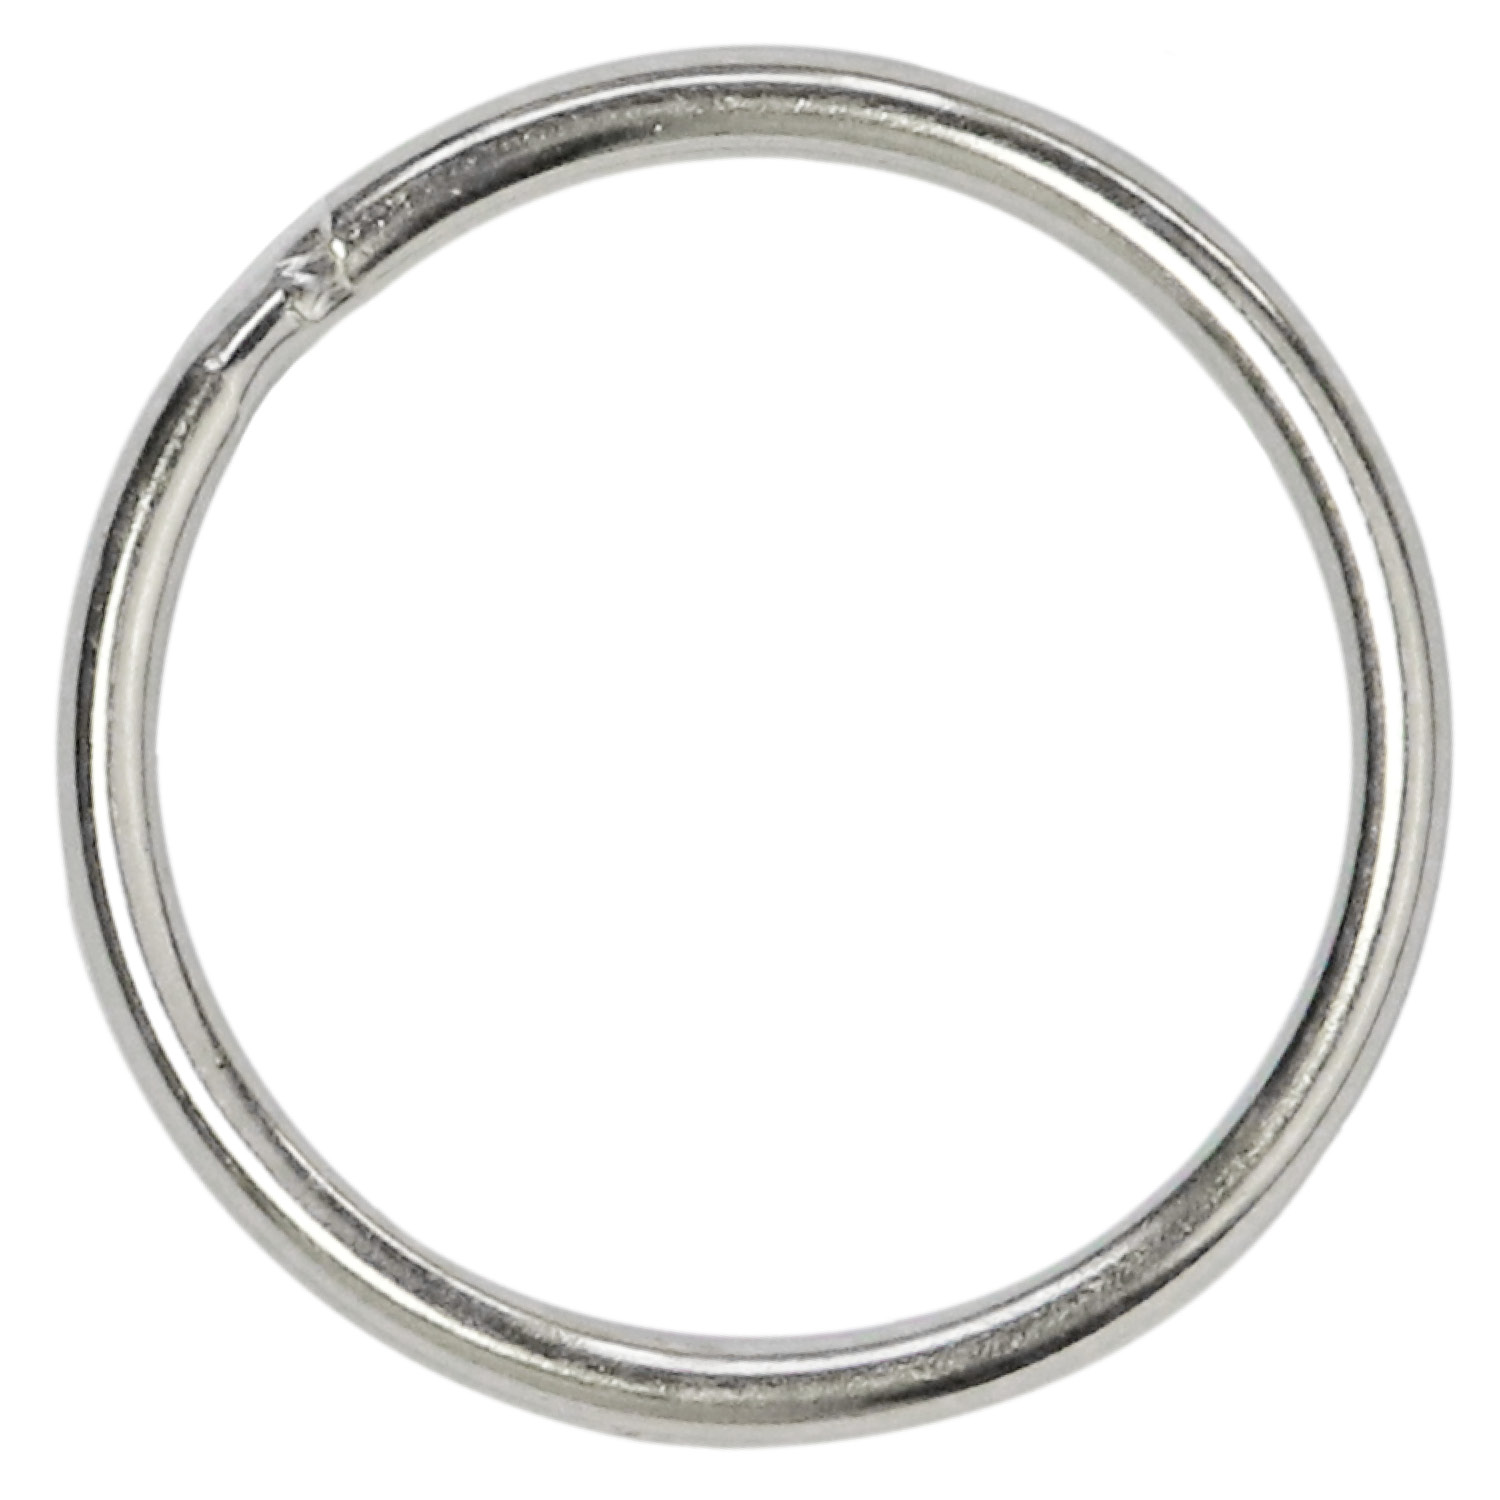 Key Rings Key Chain Metal Split Ring Bulk (Round Edged 1 Inch Diameter)  100pcs, for Home Car Keys Organization, Arts & Crafts, Lanyards, Lead Free  Nickel Plated Silver 